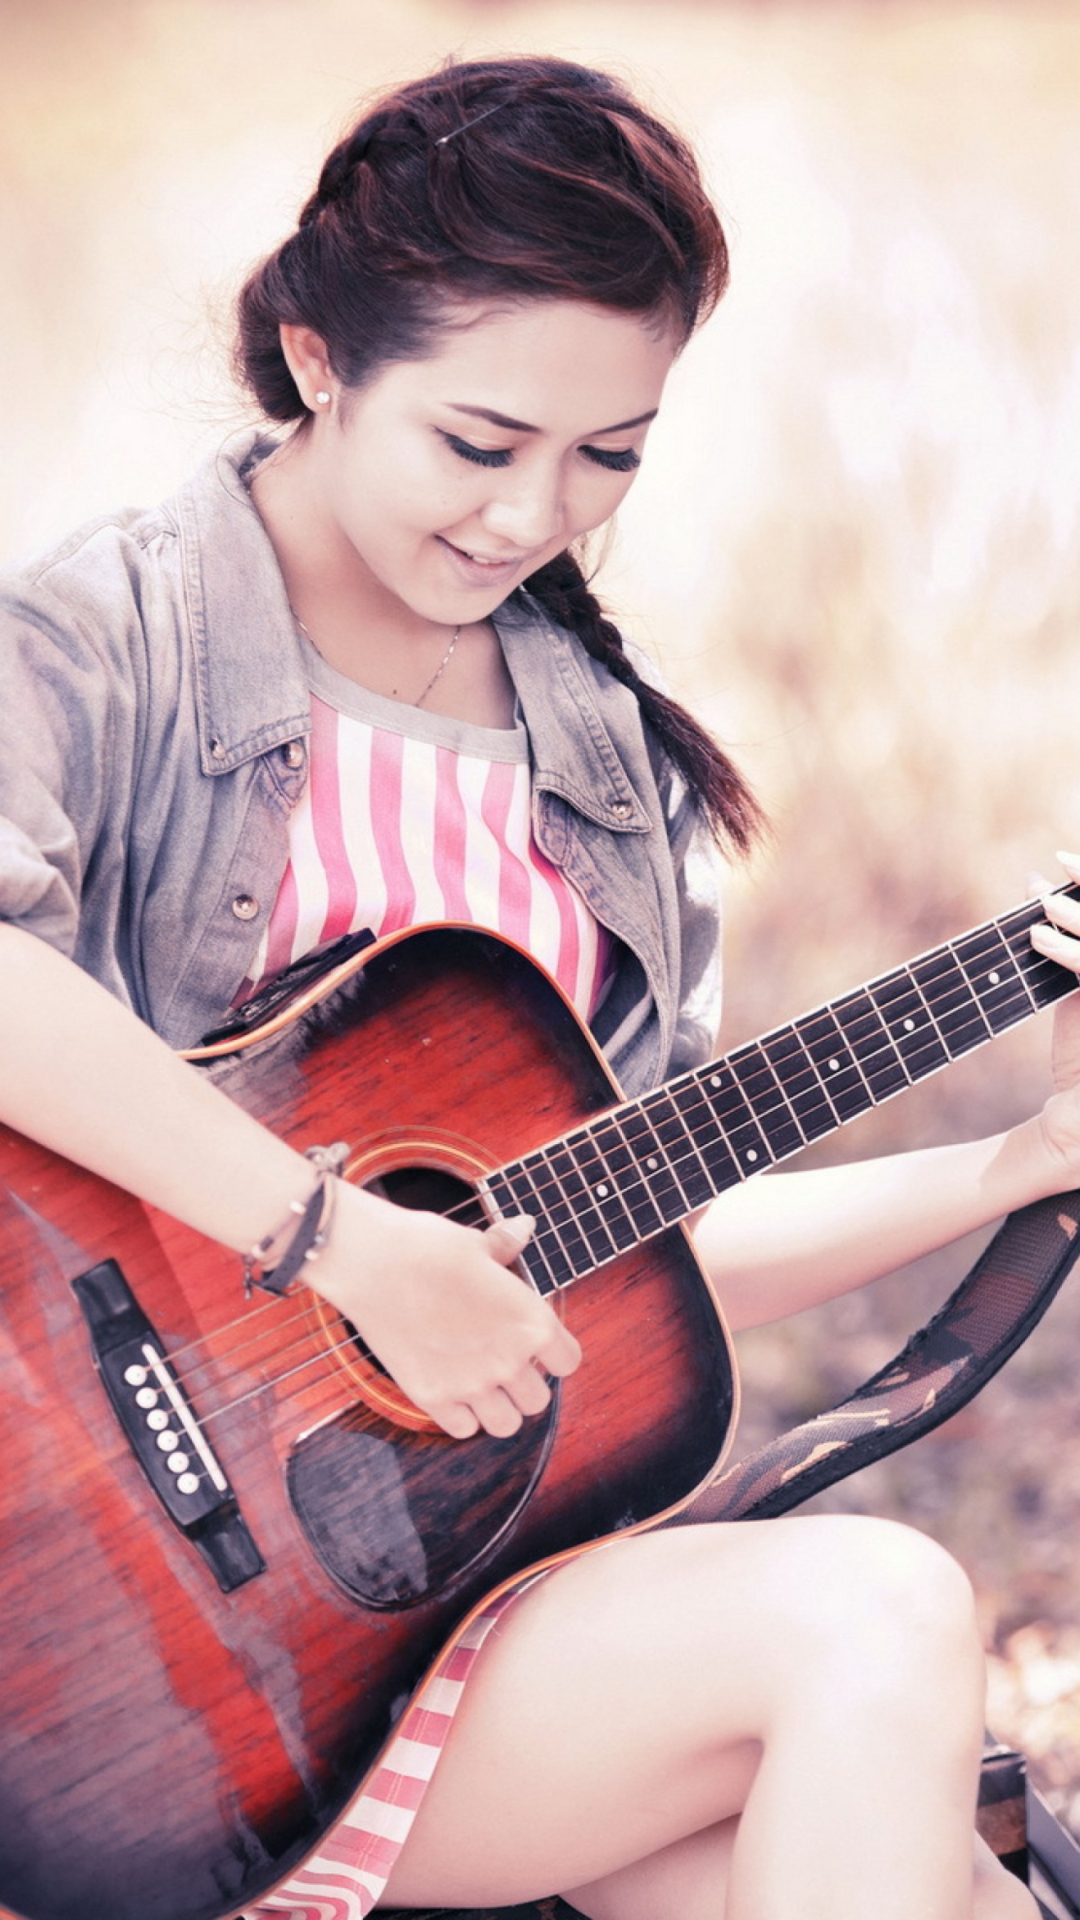 Asian Girl With Guitar wallpaper 1080x1920